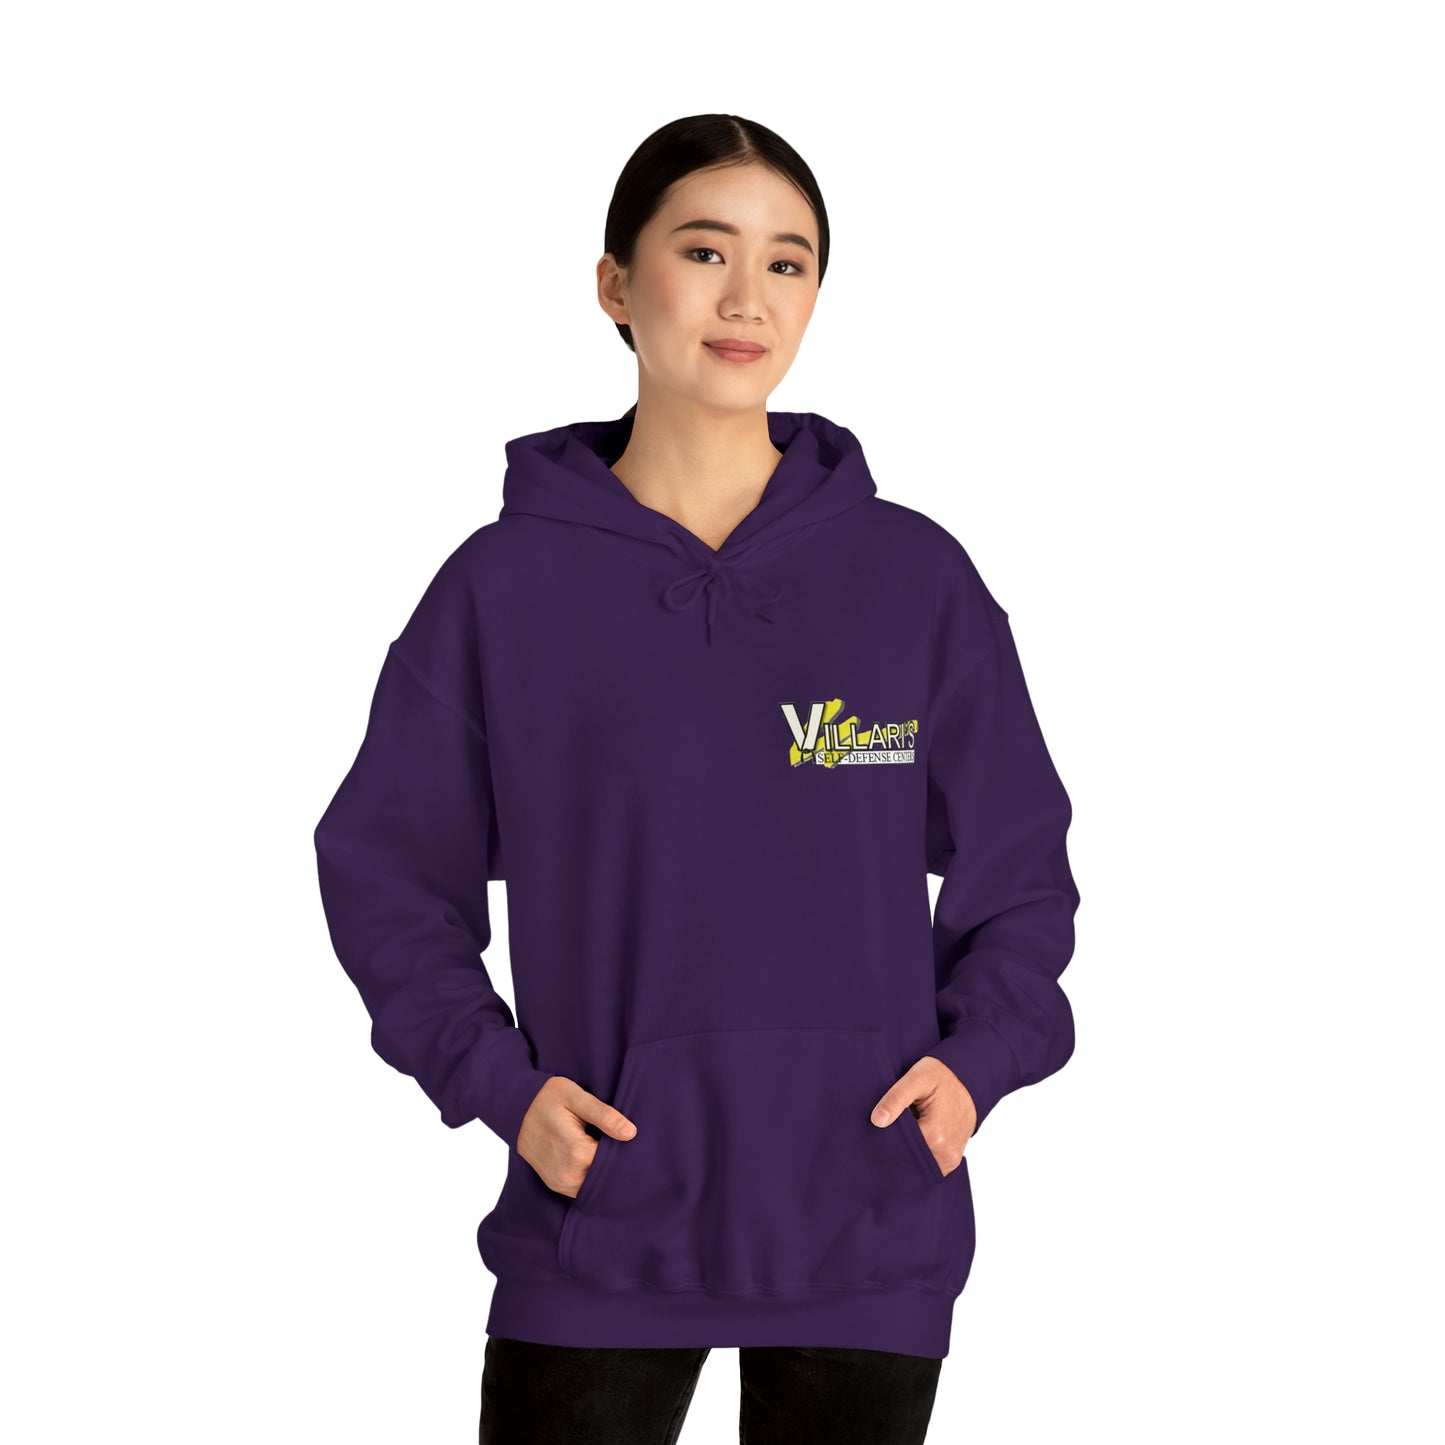 Villari's Unisex Heavy Blend™ Hooded Sweatshirt